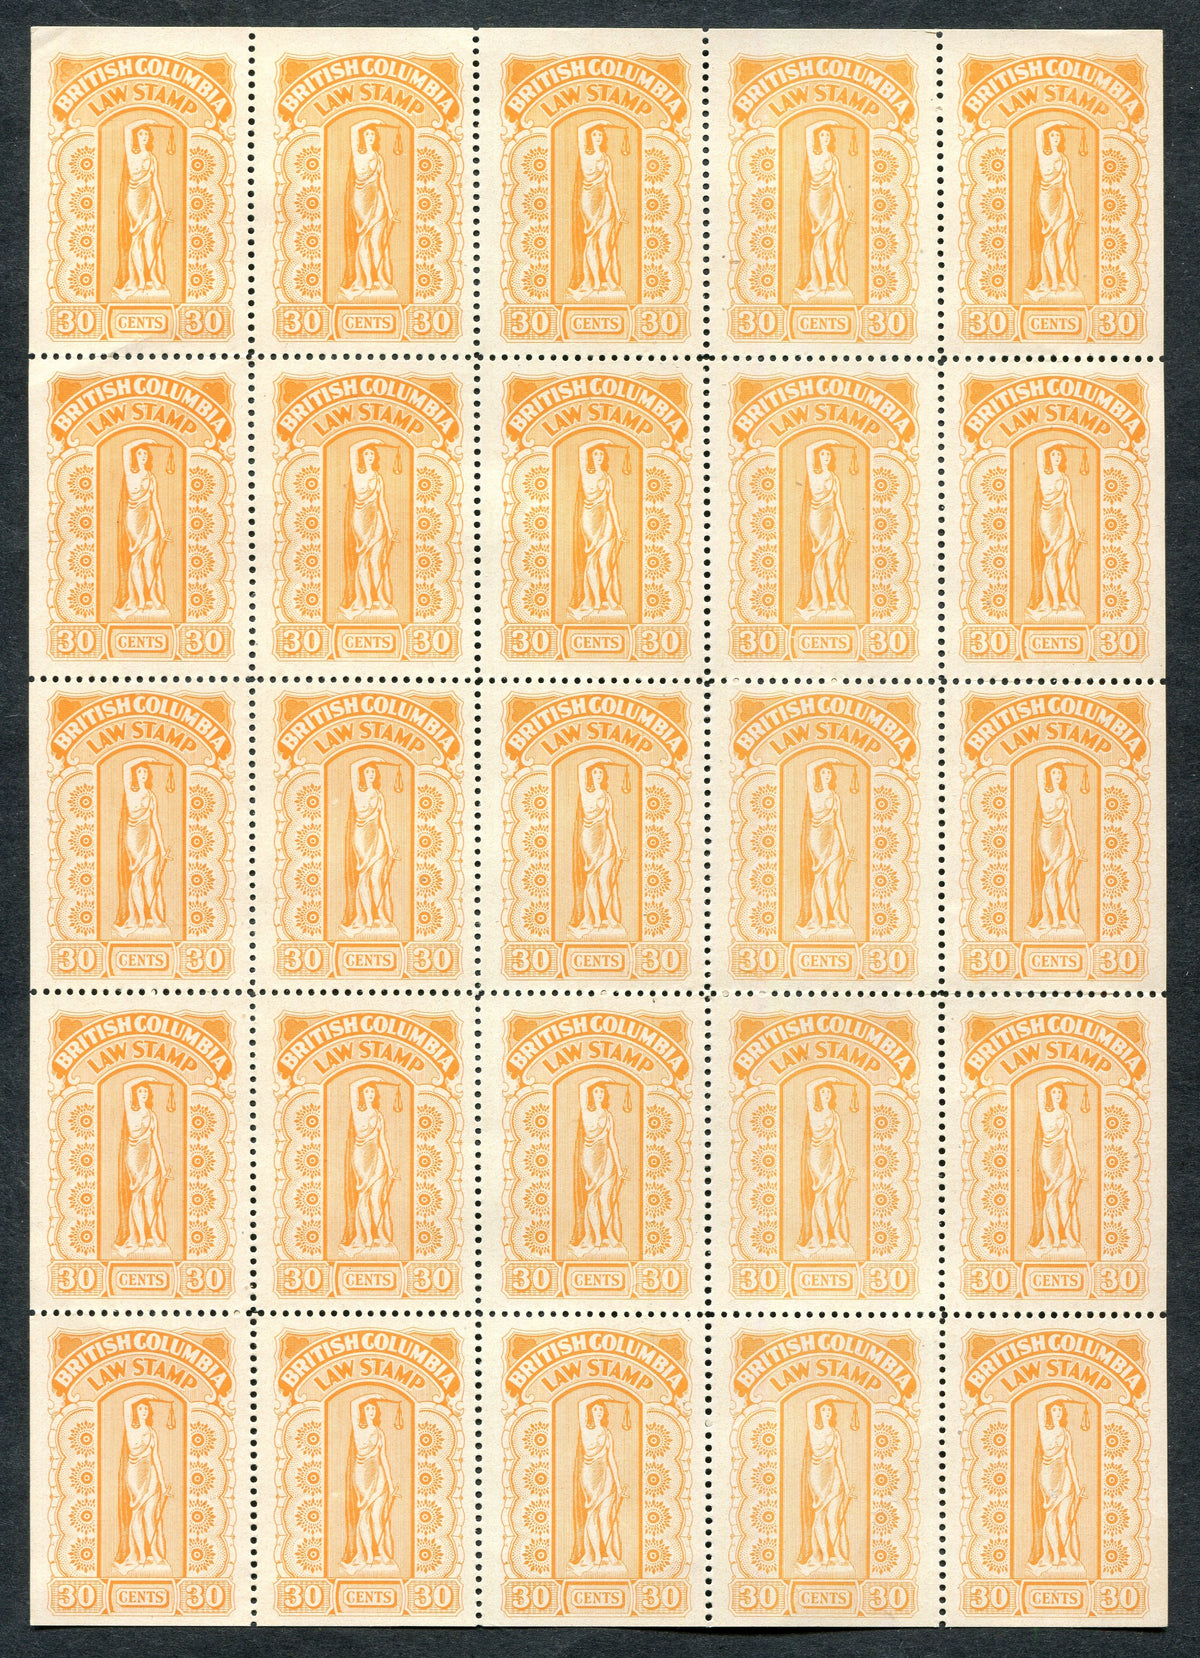 0038BC2404 - BCL38 - Mint Sheet of 25